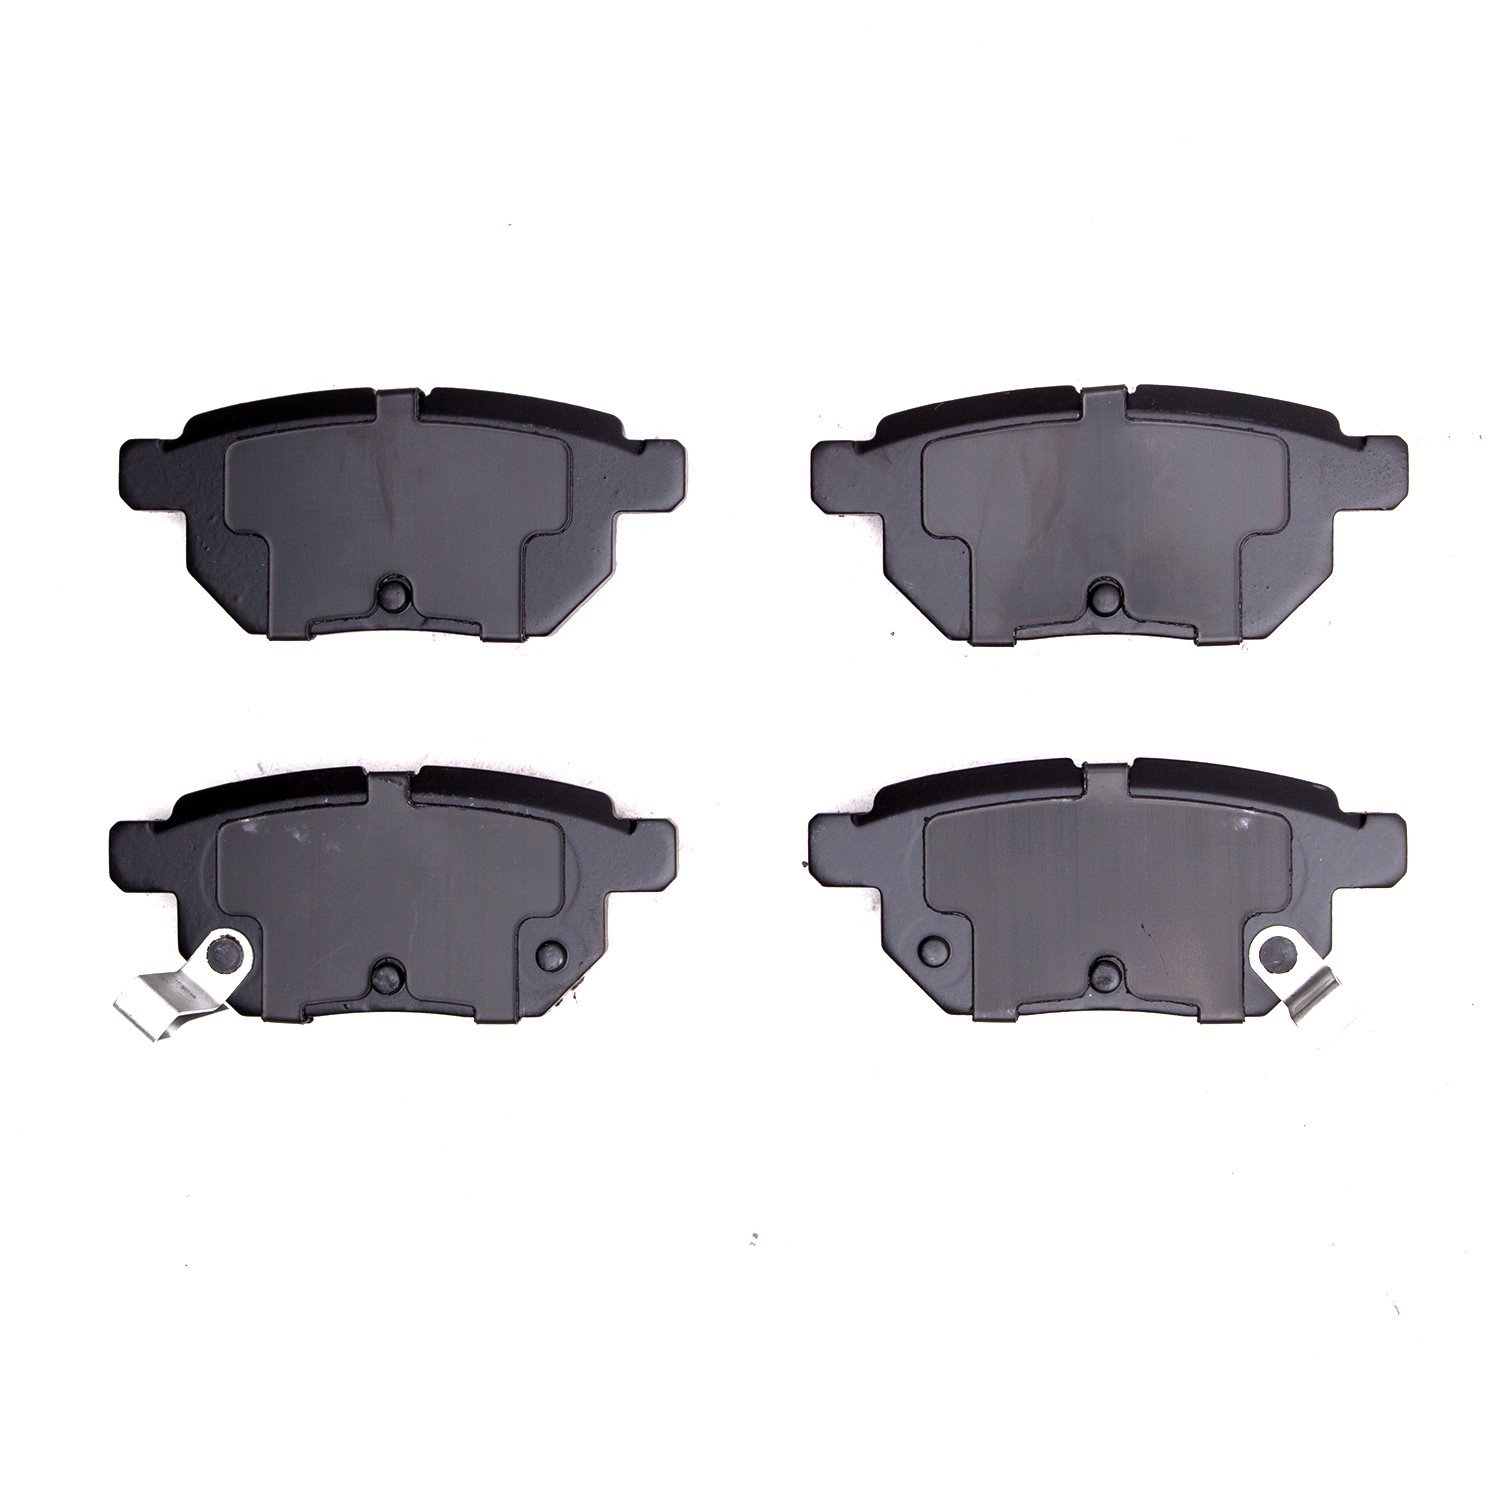 3000-Series Ceramic Brake Pads, Fits Select Multiple Makes/Models